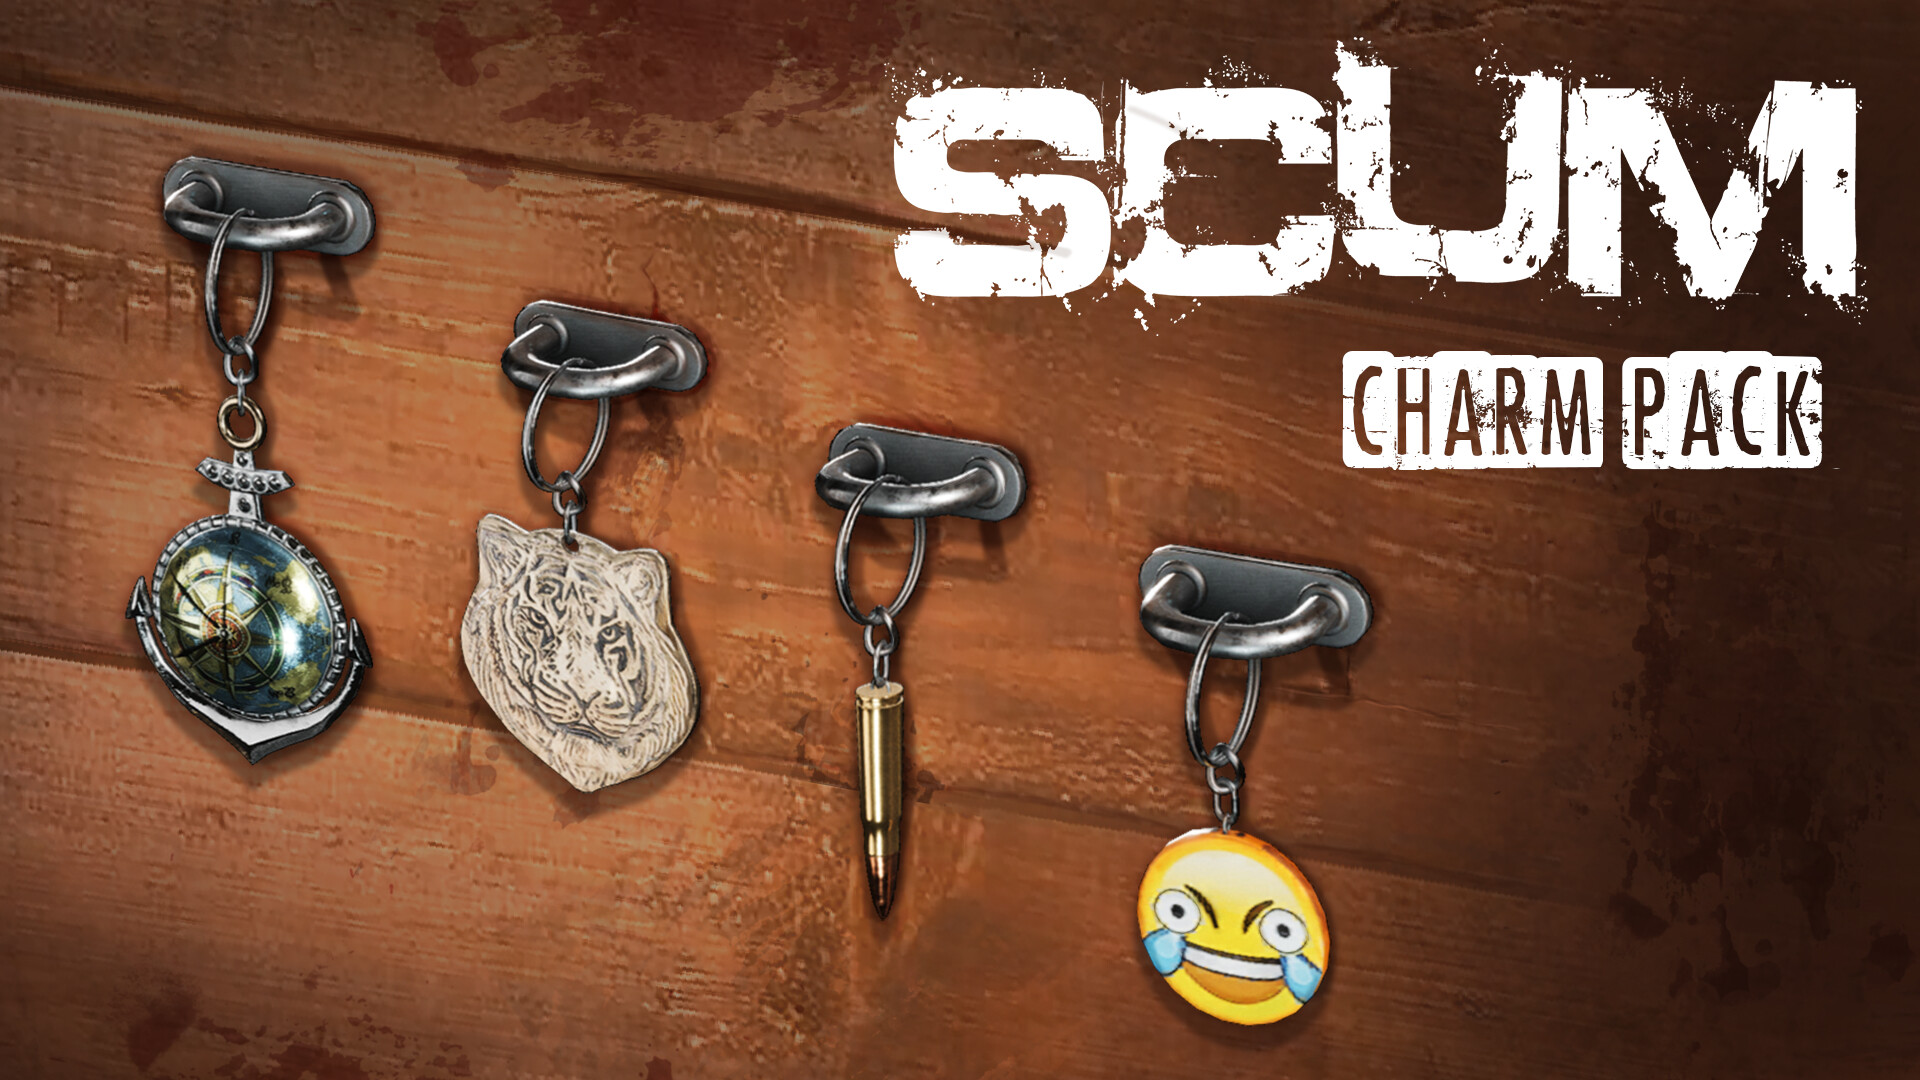 [$ 3.25] SCUM - Charms pack DLC Steam CD Key